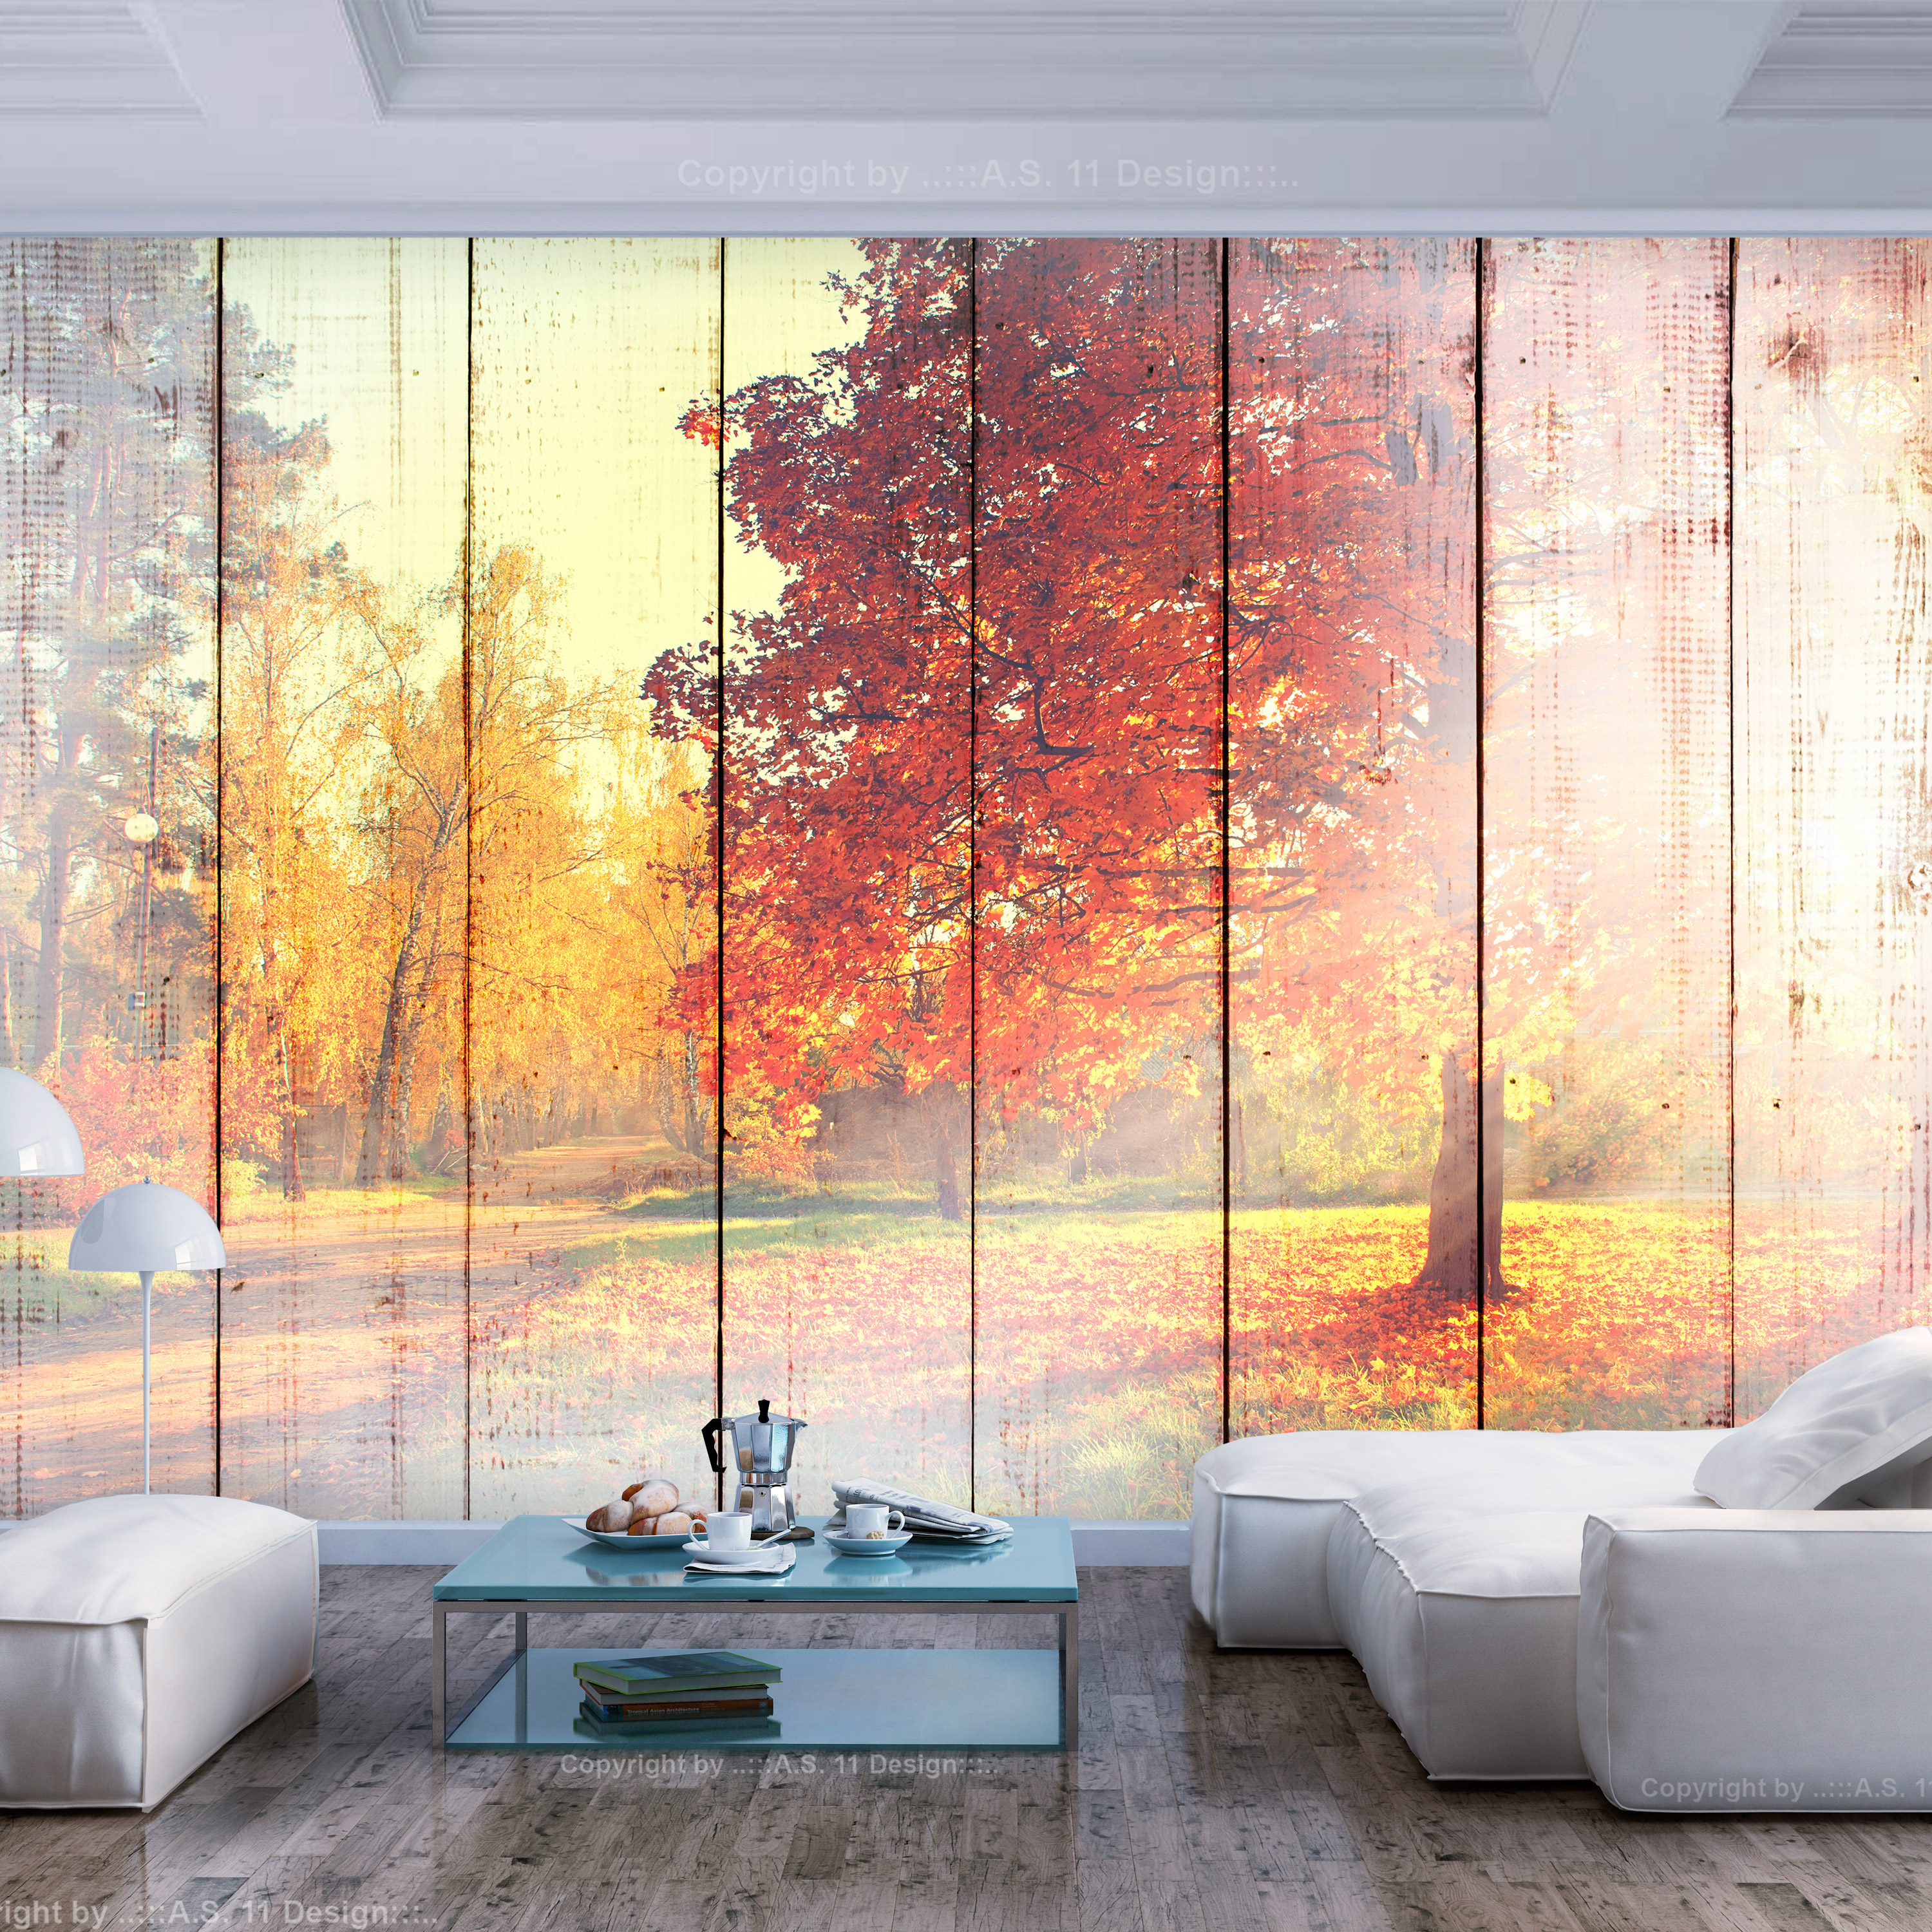 Self-adhesive Wallpaper - Autumn Sun - 392x280